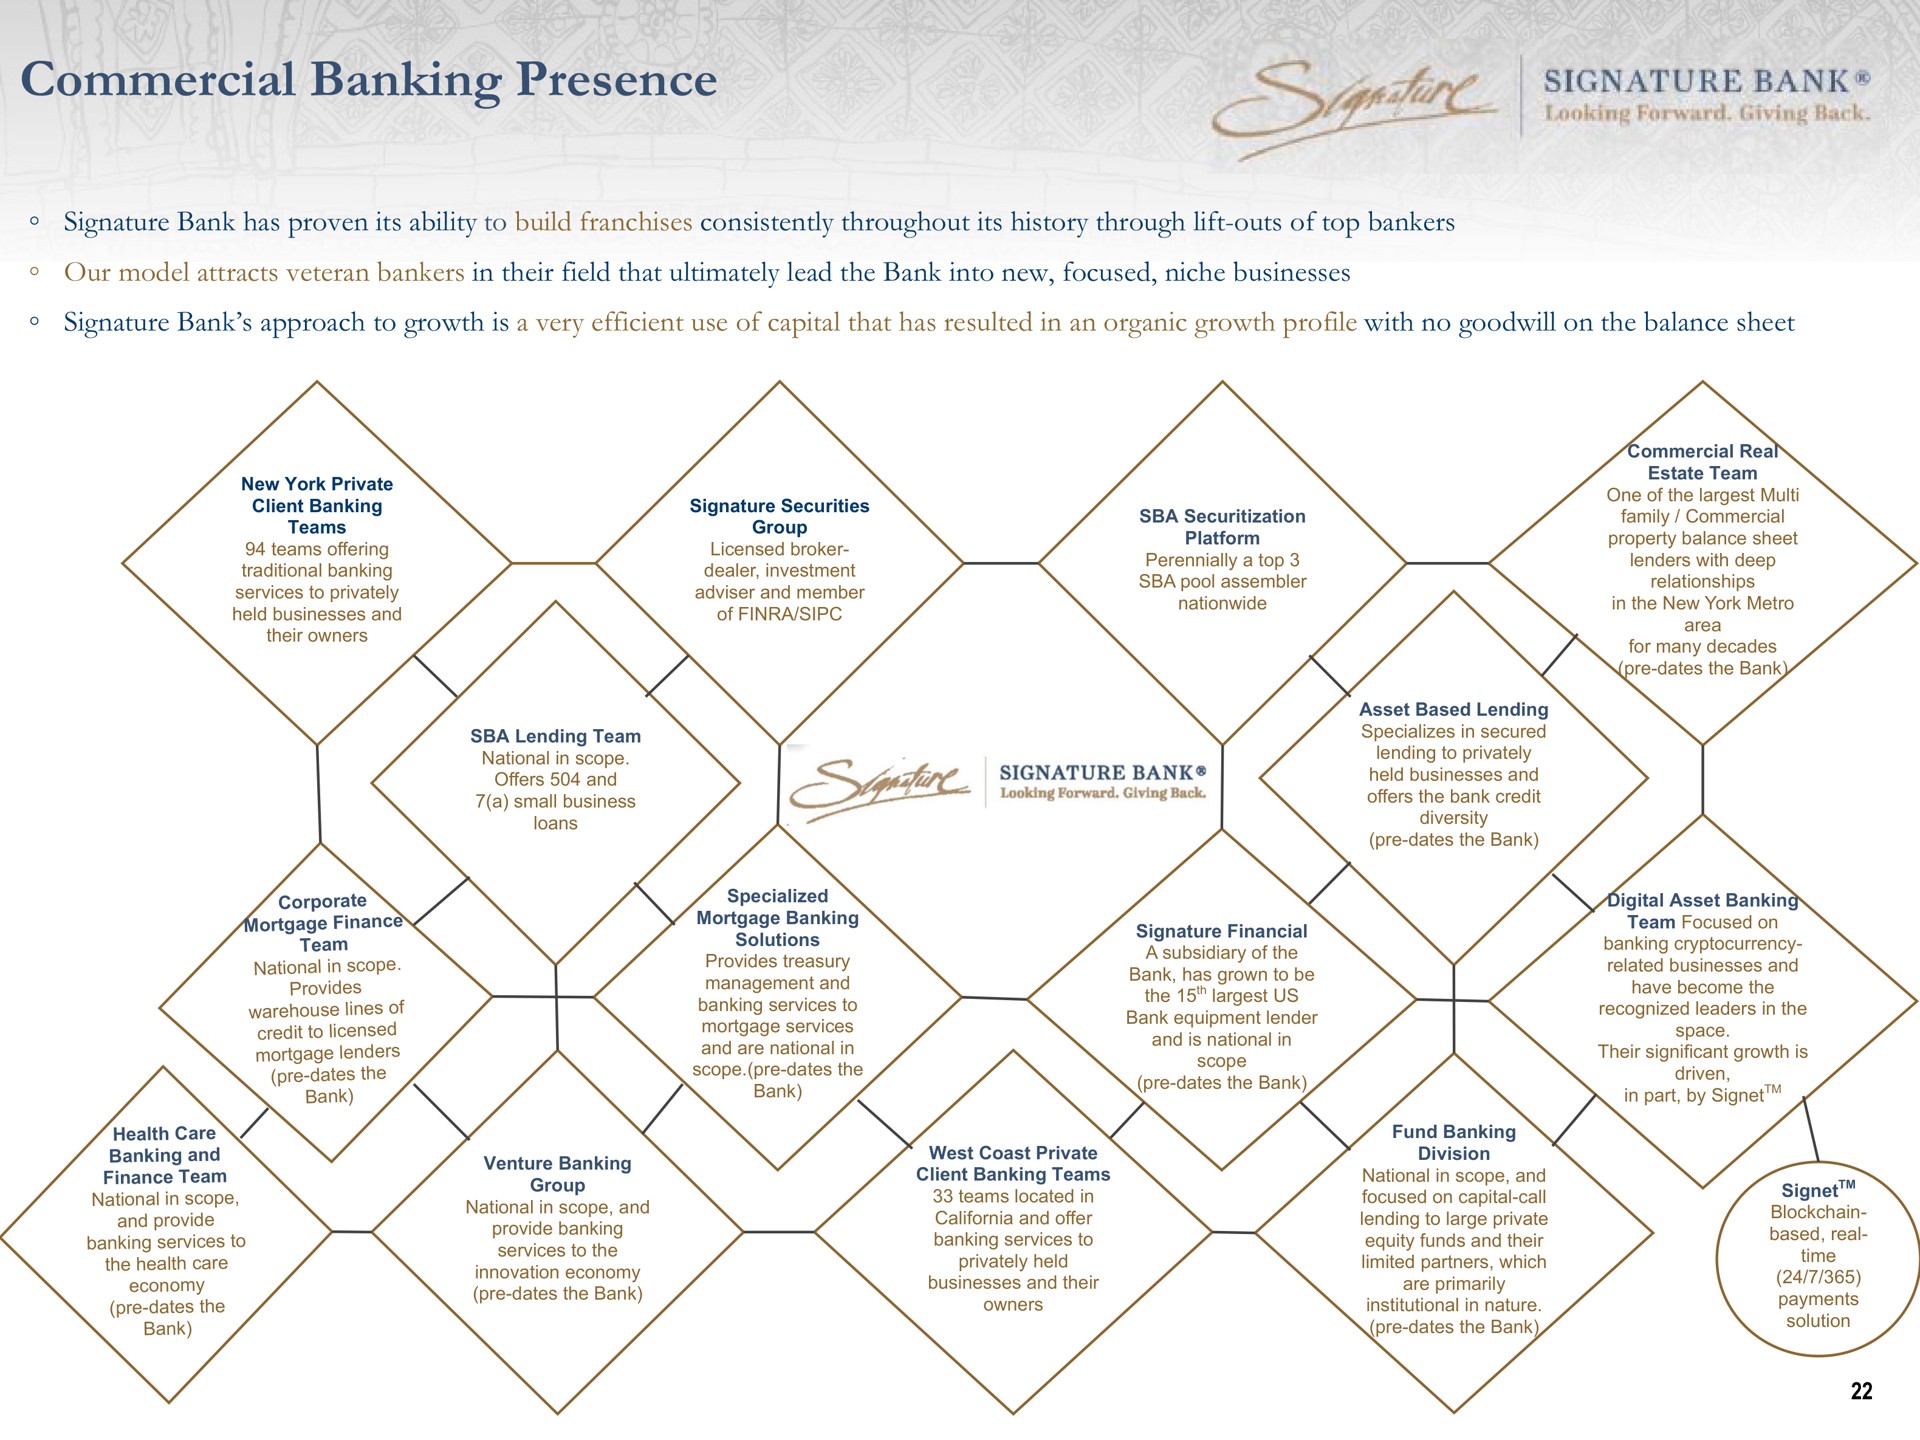 commercial banking presence signature bank | Signature Bank